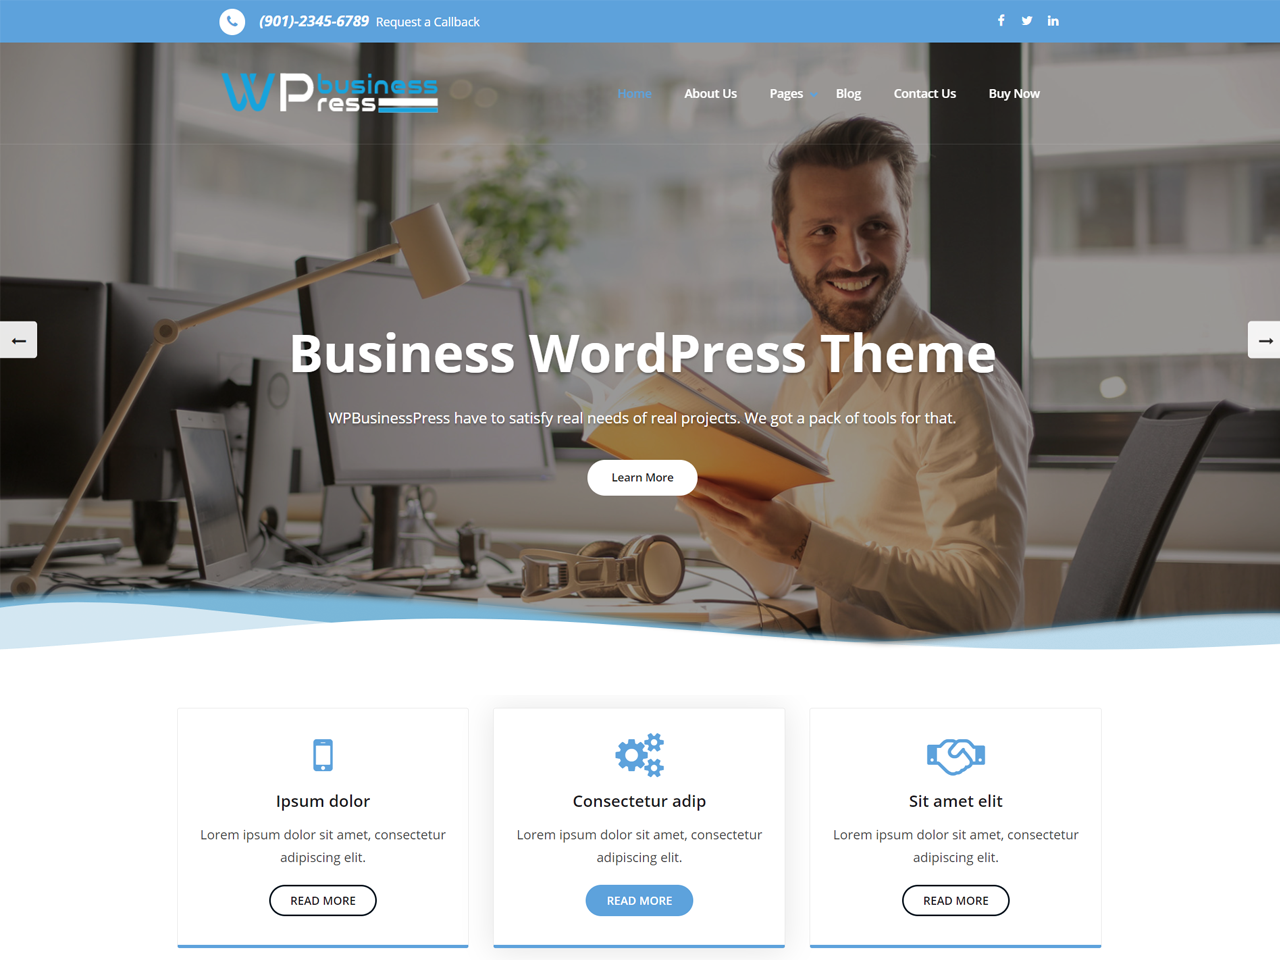 awpbusinesspress free wordpress theme